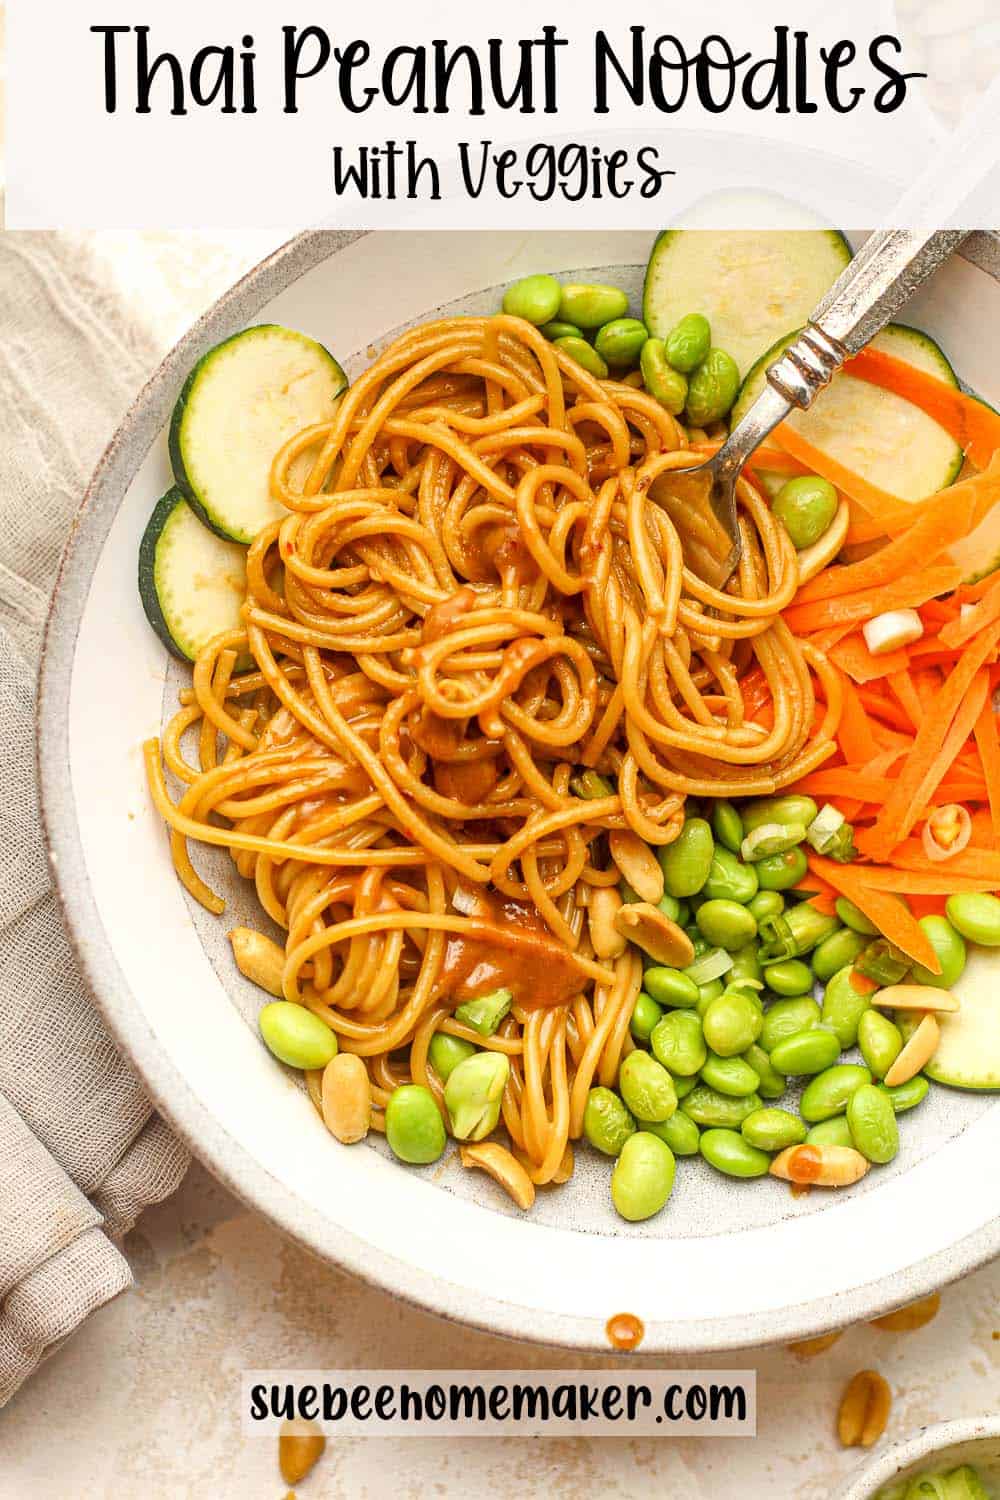 A bowl of Thai peanut noodles with veggies.